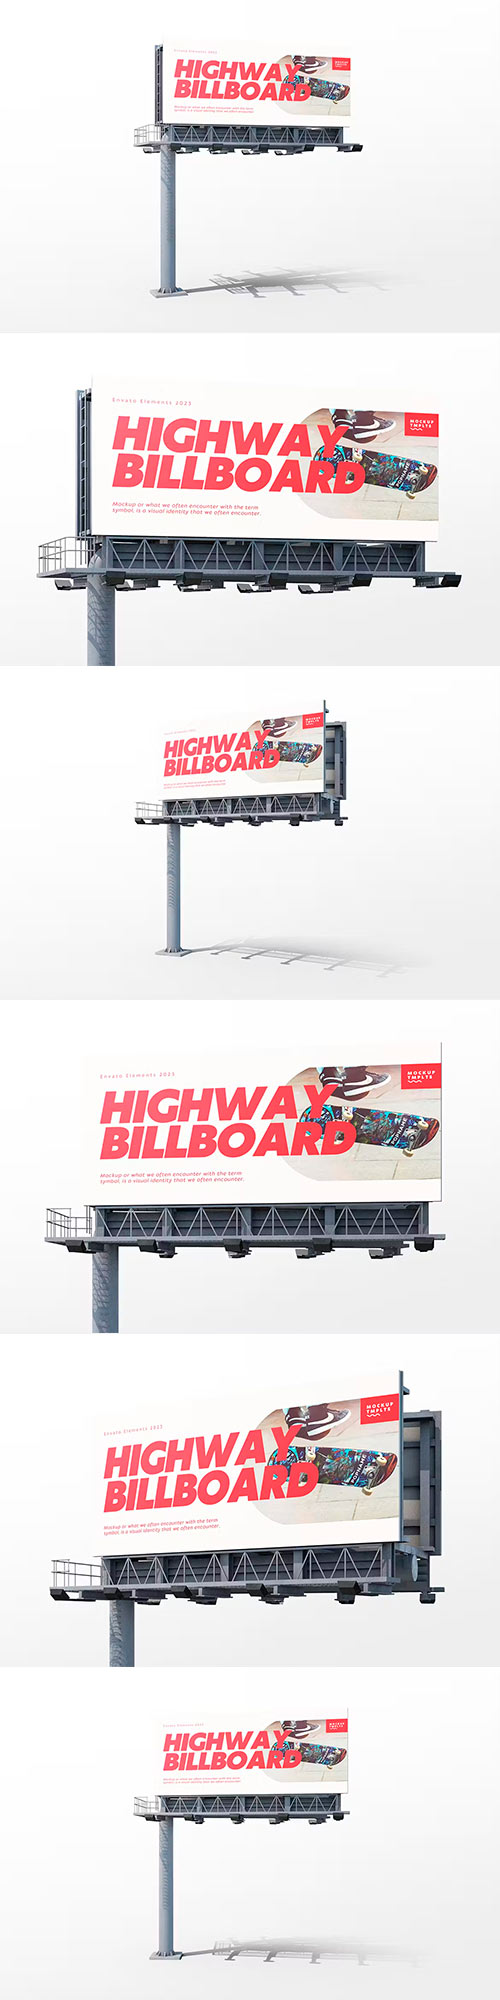 Highway Billboard Mockup PYFZQ4B